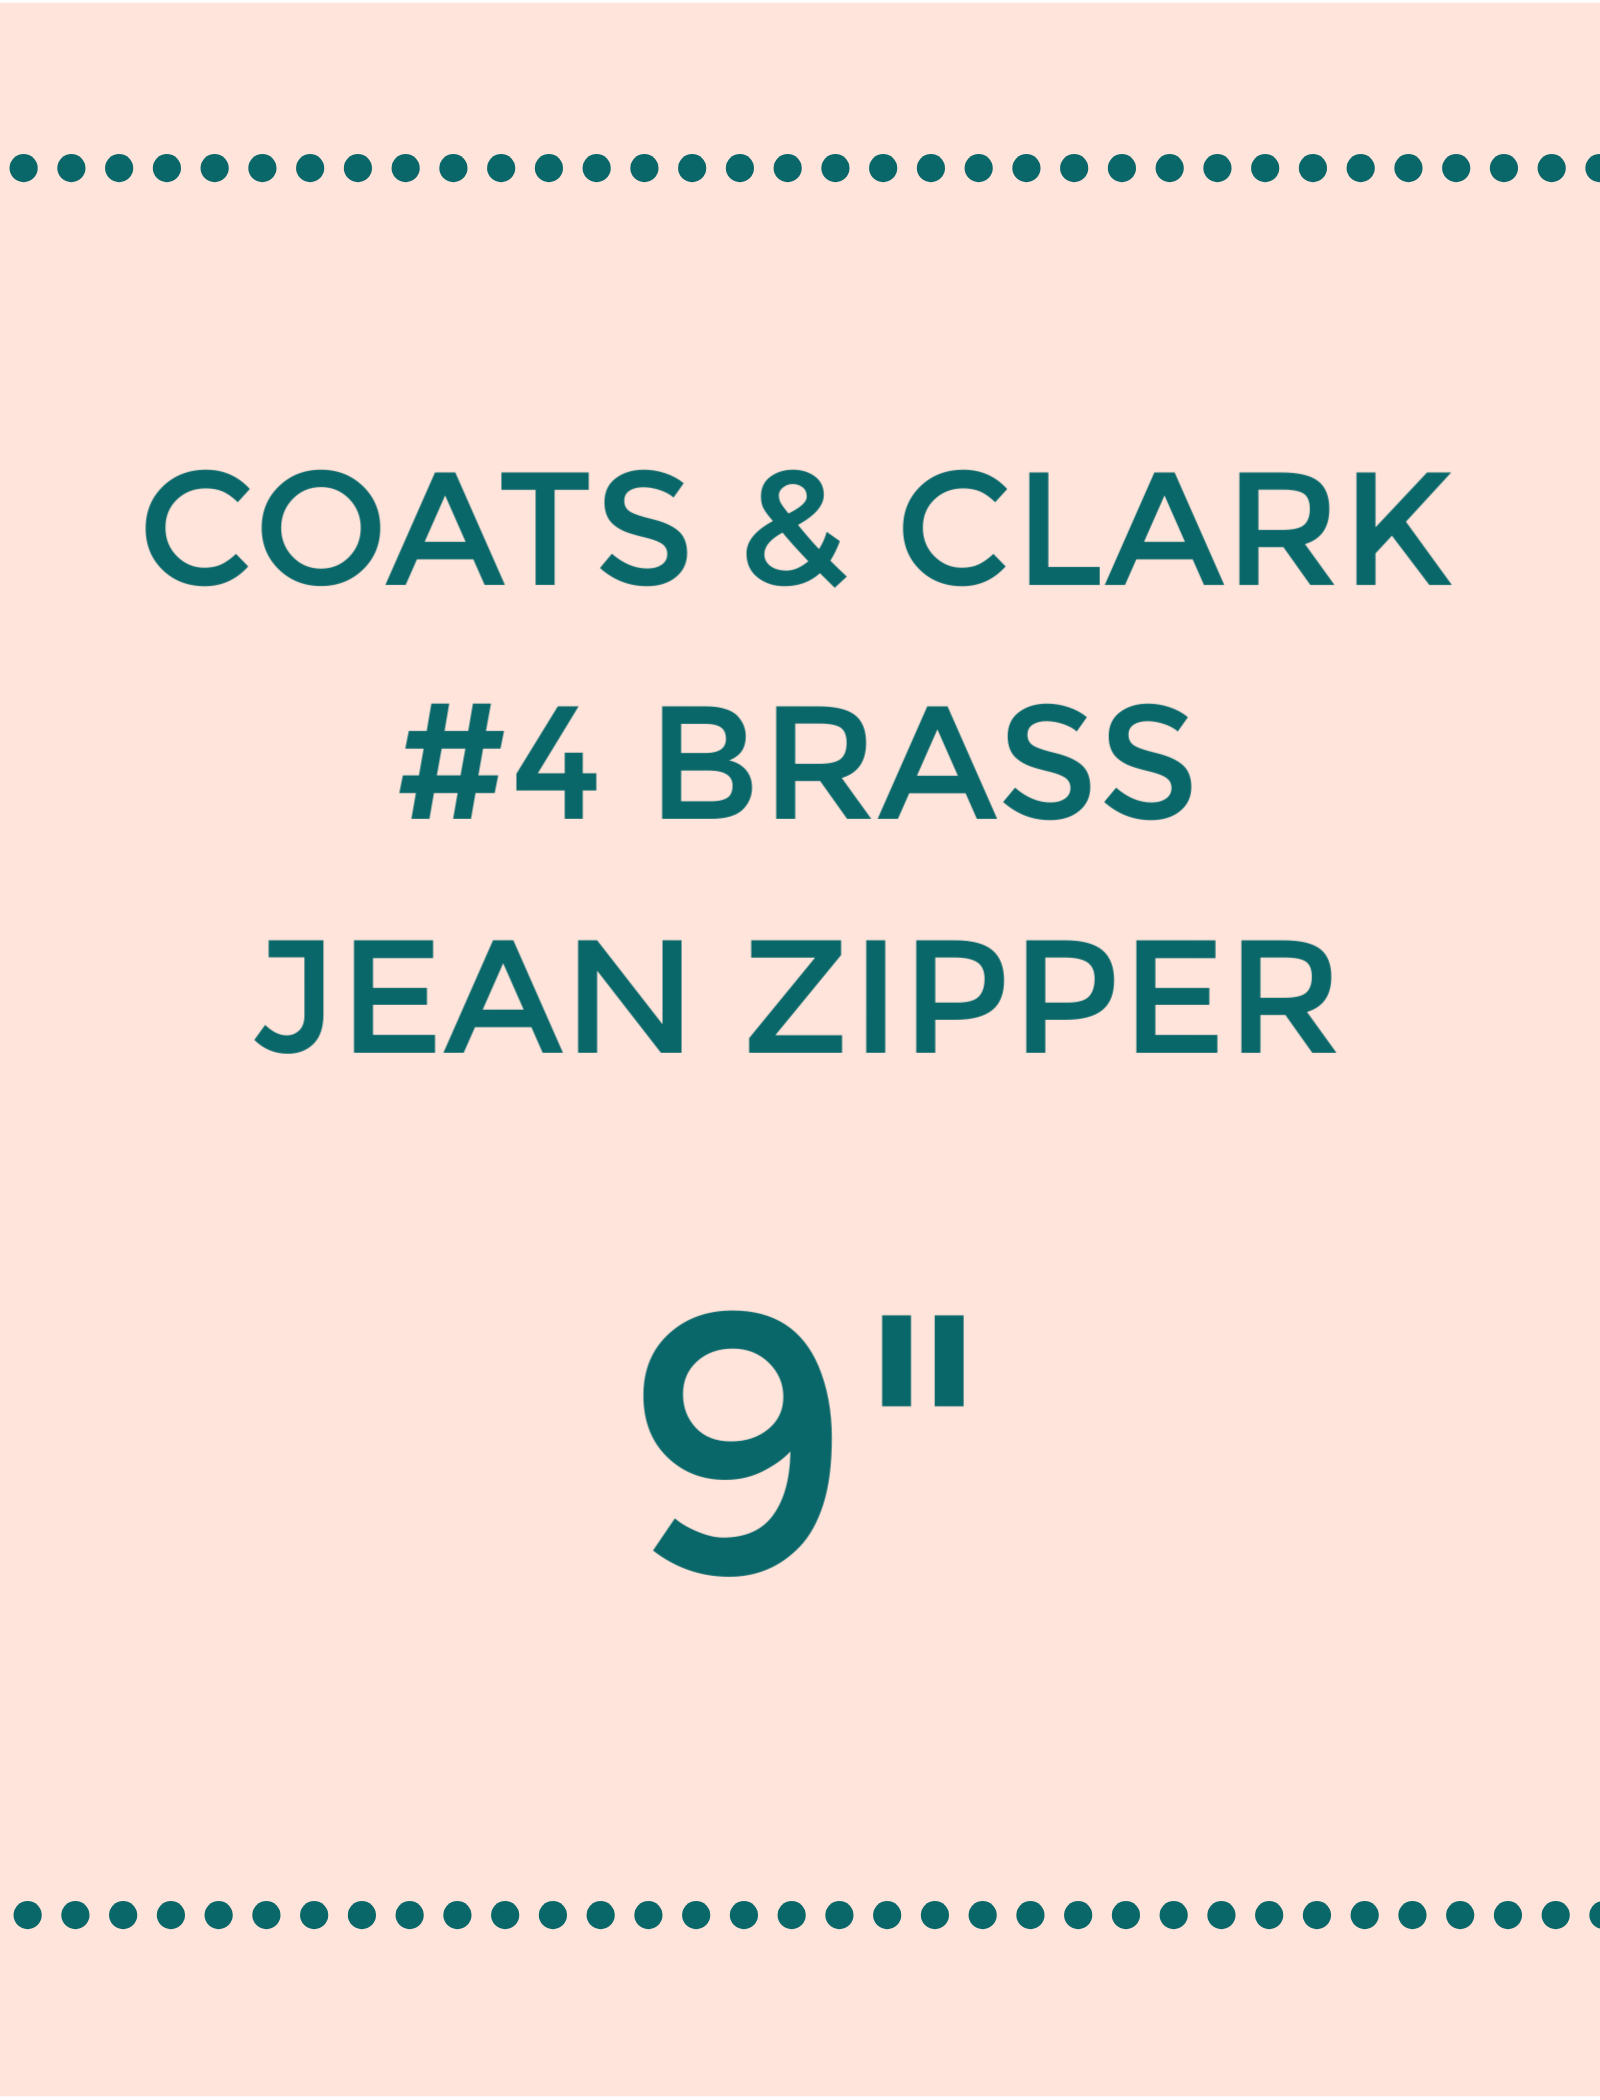 Coats & Clark #4 Brass Jean Zipper - 9 - Stonemountain & Daughter Fabrics